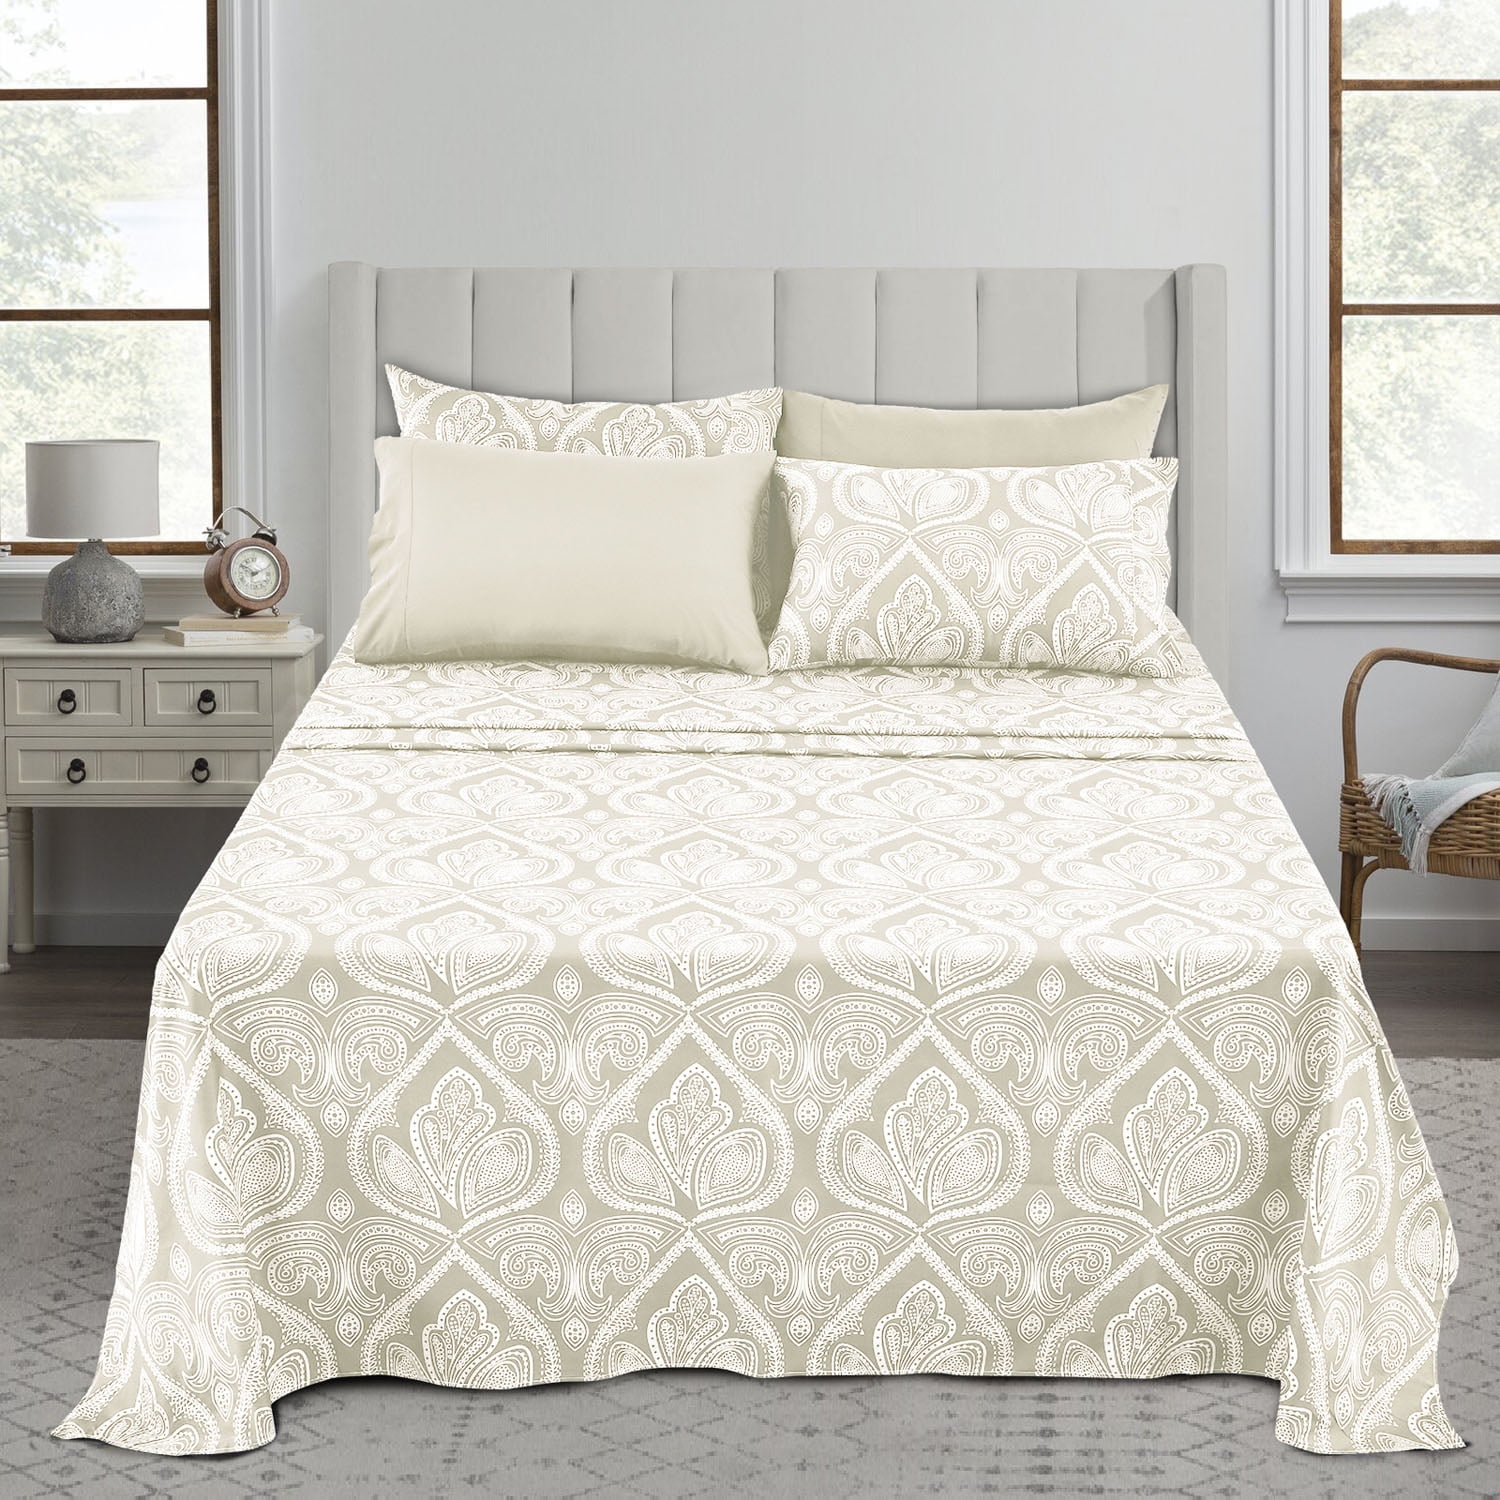 Details about   Soft Breathable 4 Pcs Bedroom Sheet Set 1000 Tc Chocolate Stripe Color 